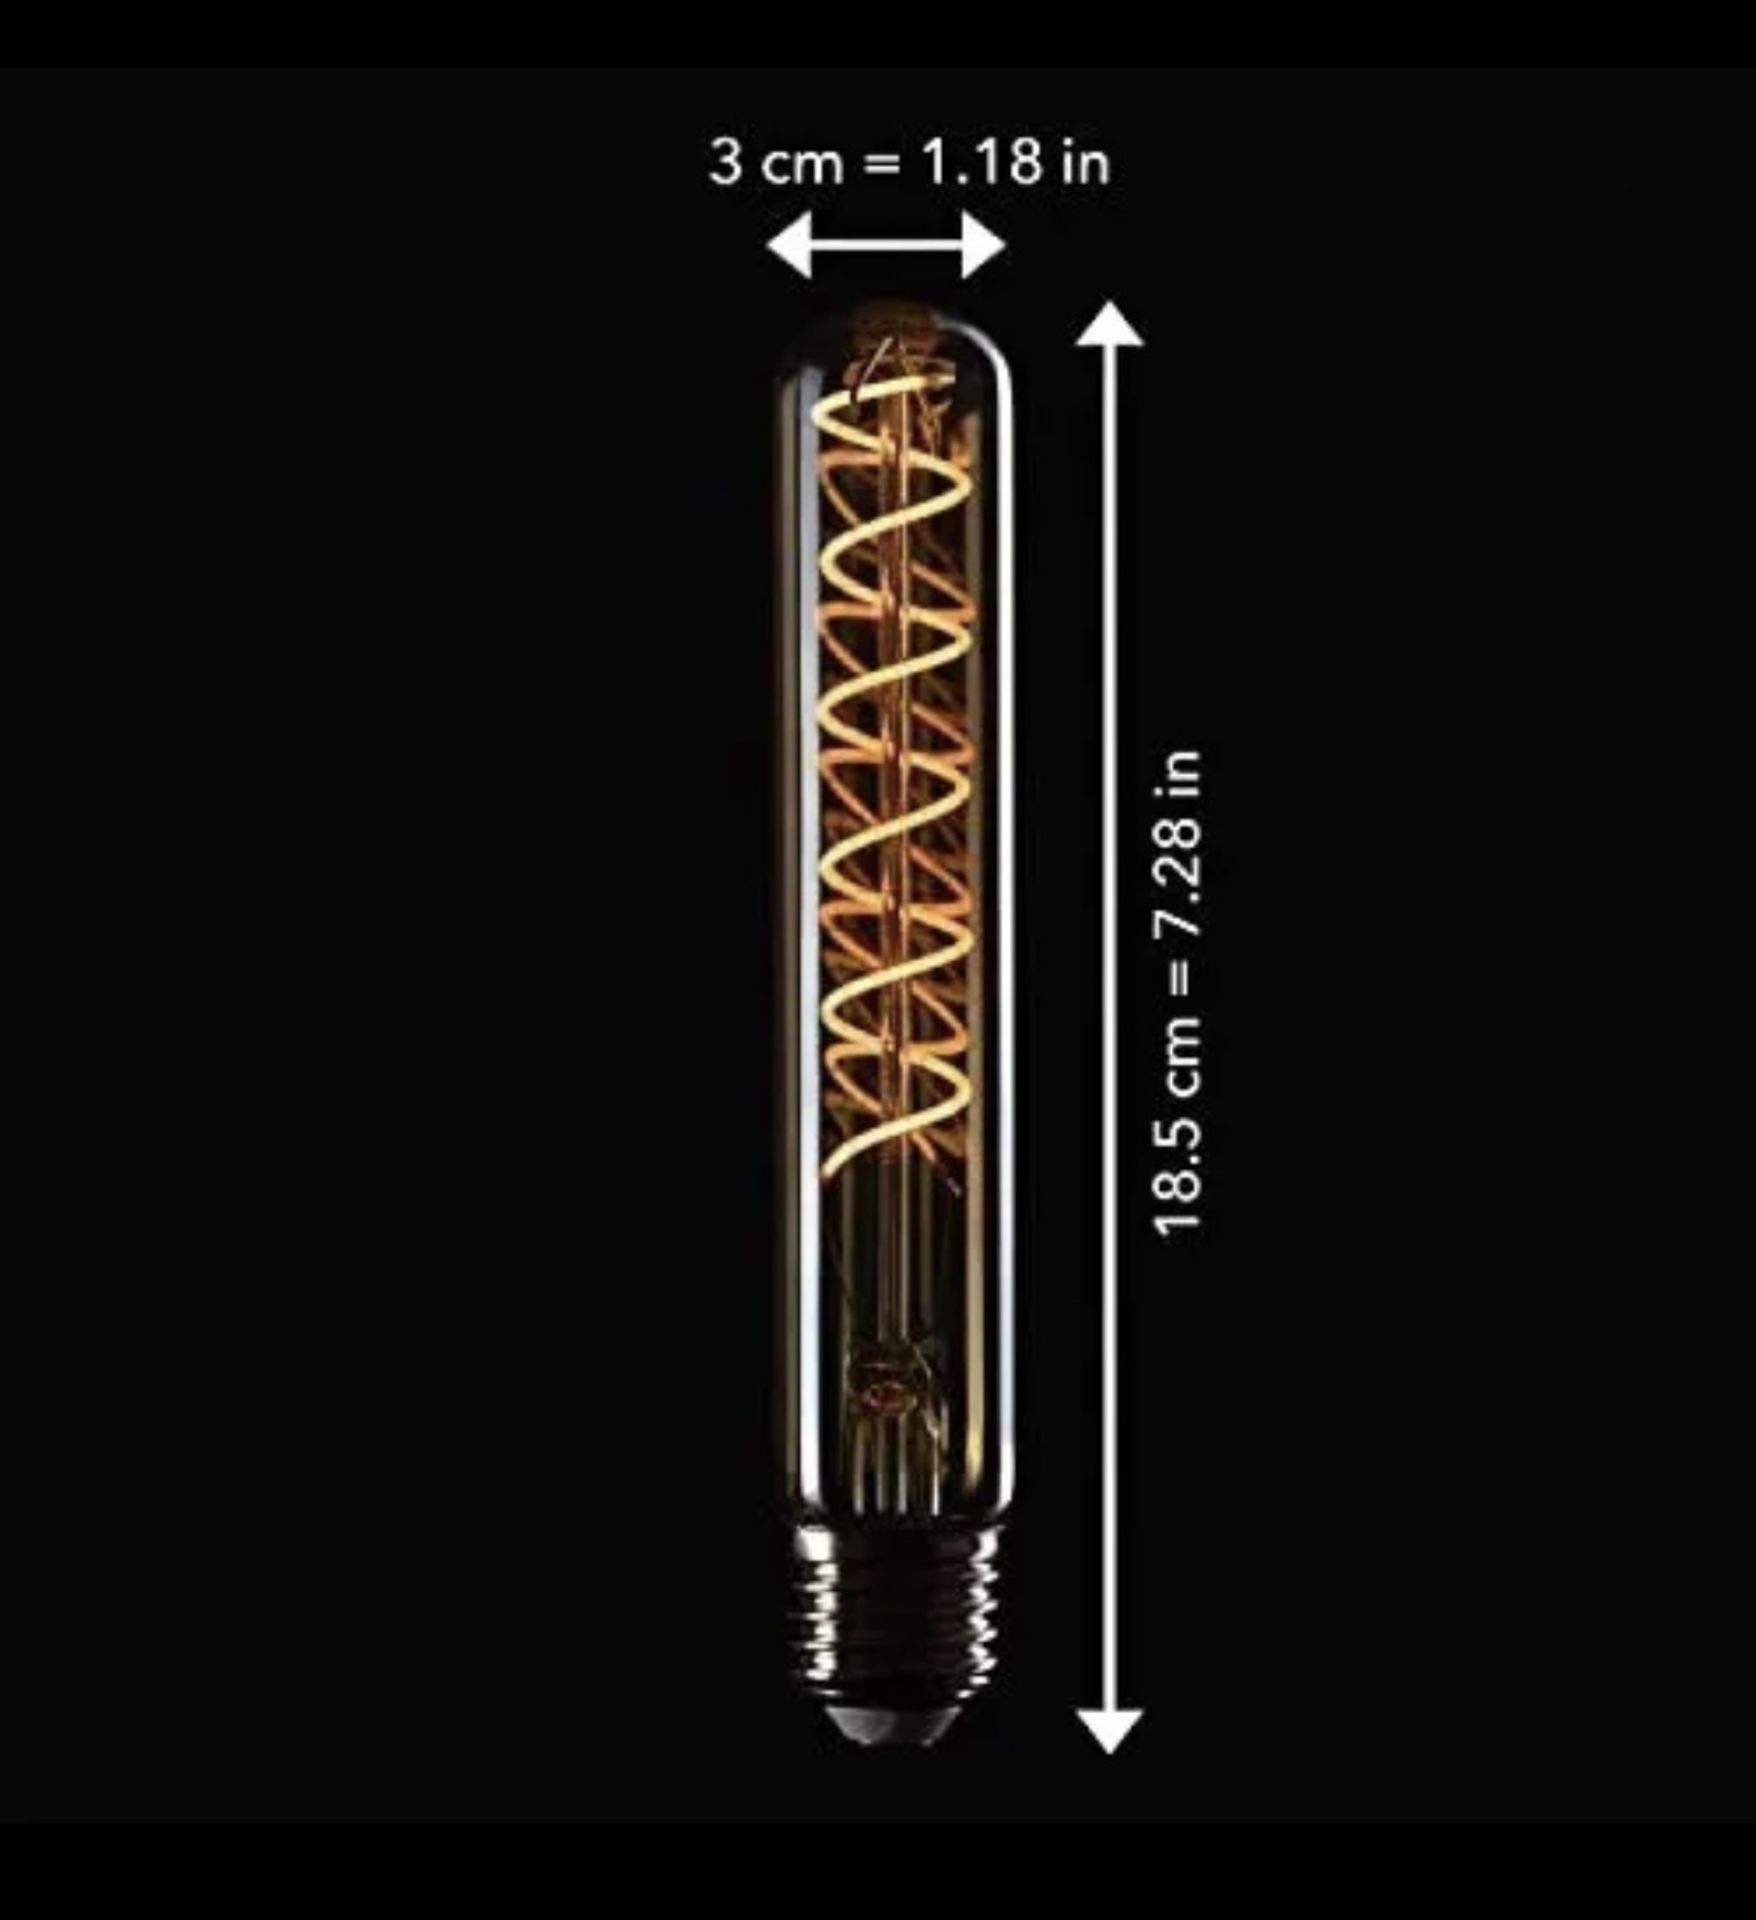 12 x CROWN LED Edison Flat Pipe Lightbulb 4W/40W Warm White - NEW & BOXED - BIG RRP! - Image 6 of 8